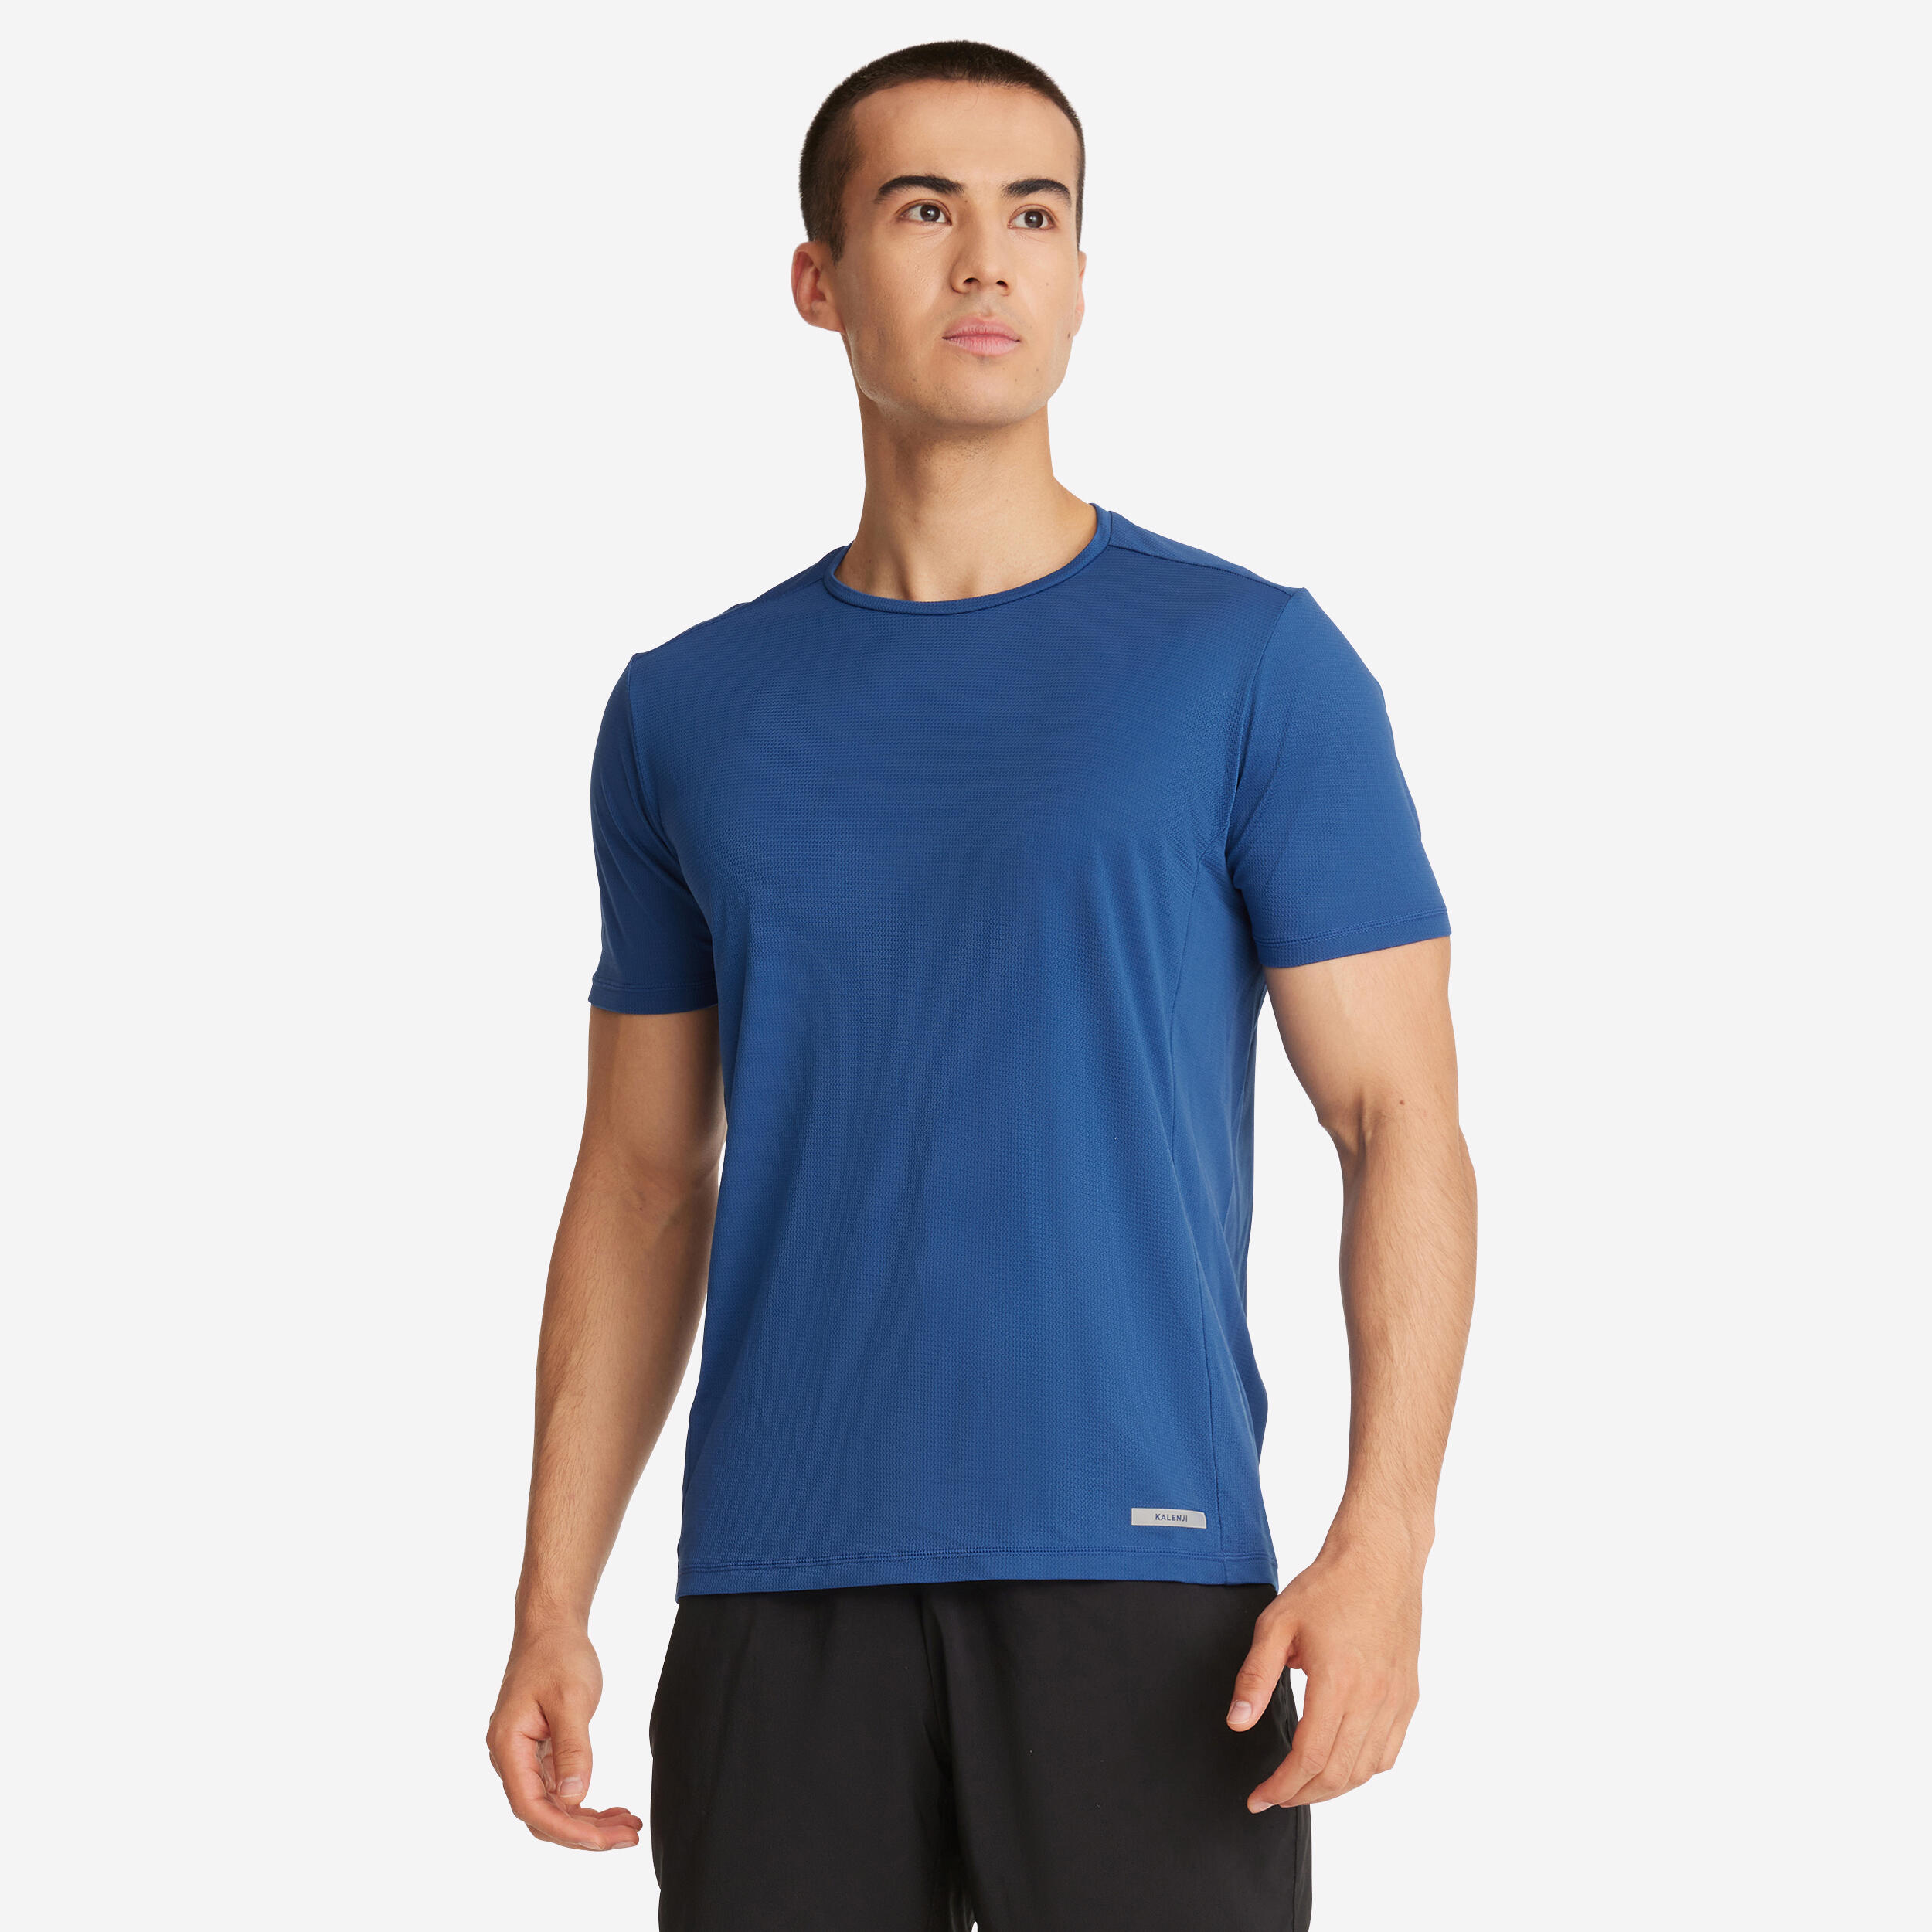 Best Mens Running Shirts - Decathlon Kalenji Run Dry+ Running T